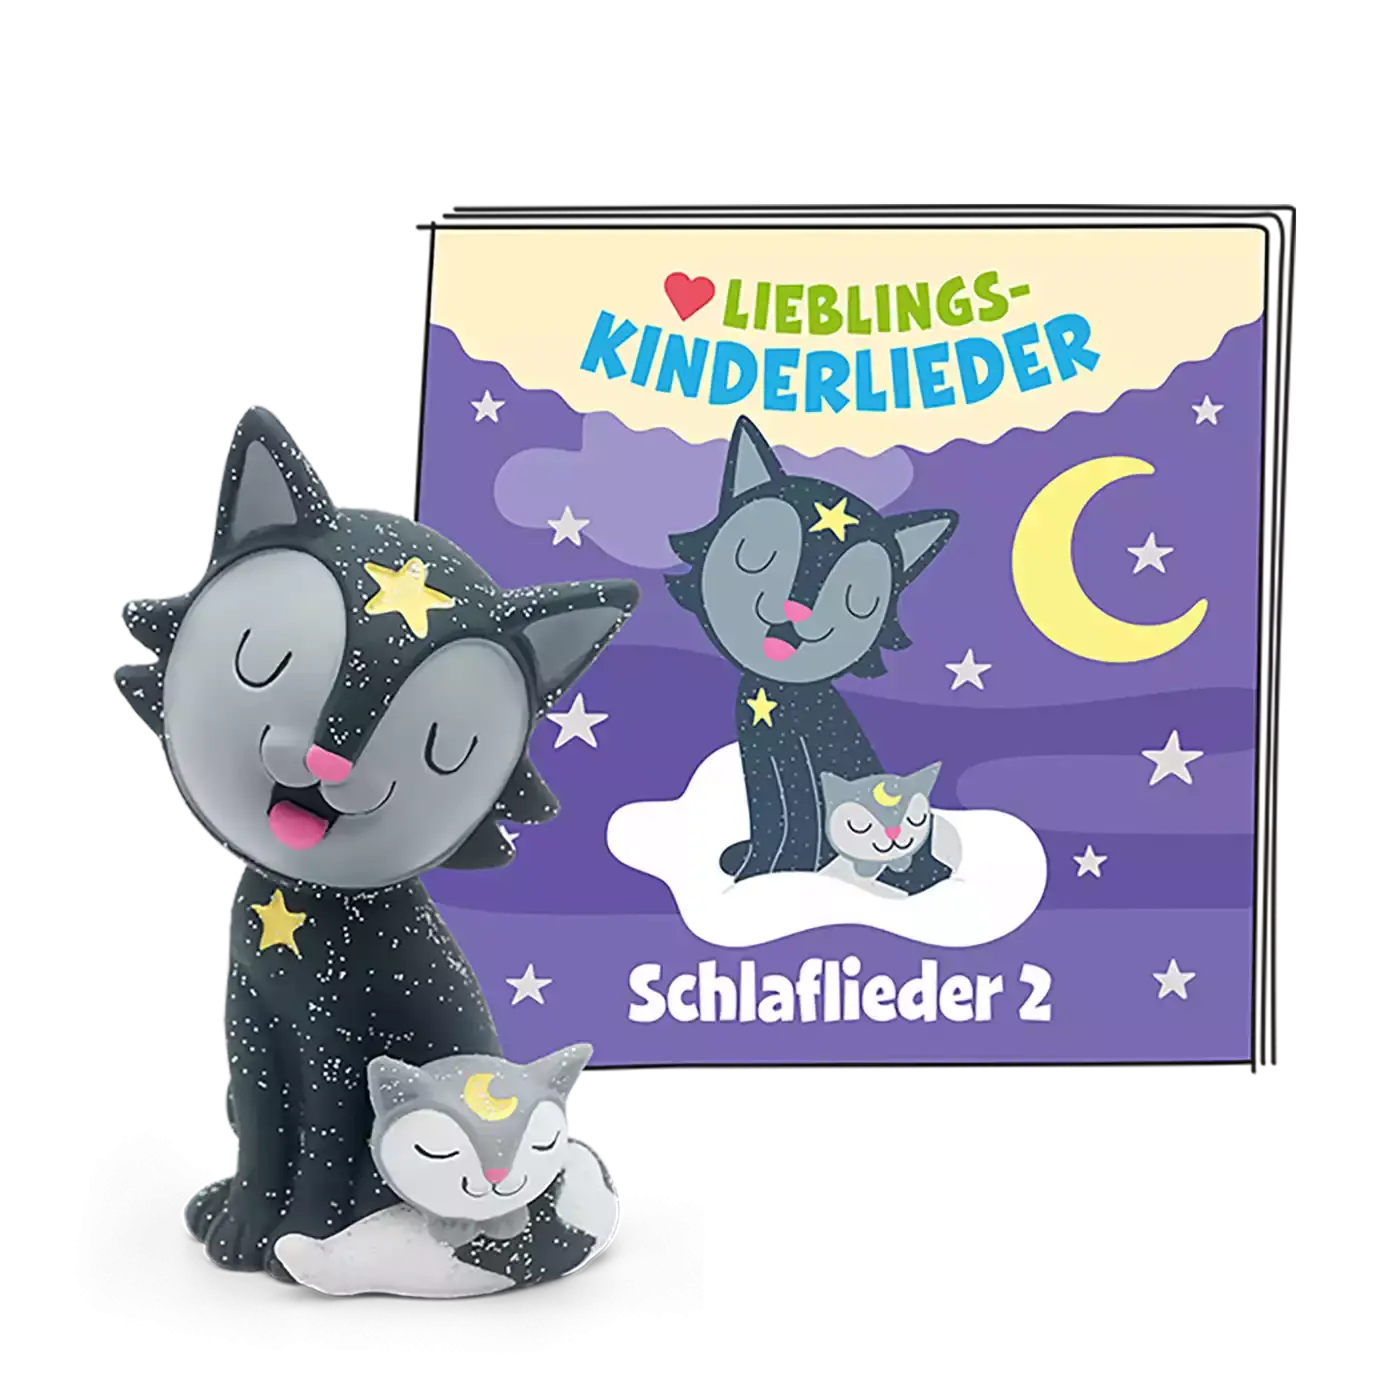 Lieblings-Kinderlieder - Schlaflieder 2 tonies Schwarz 2000581999104 1